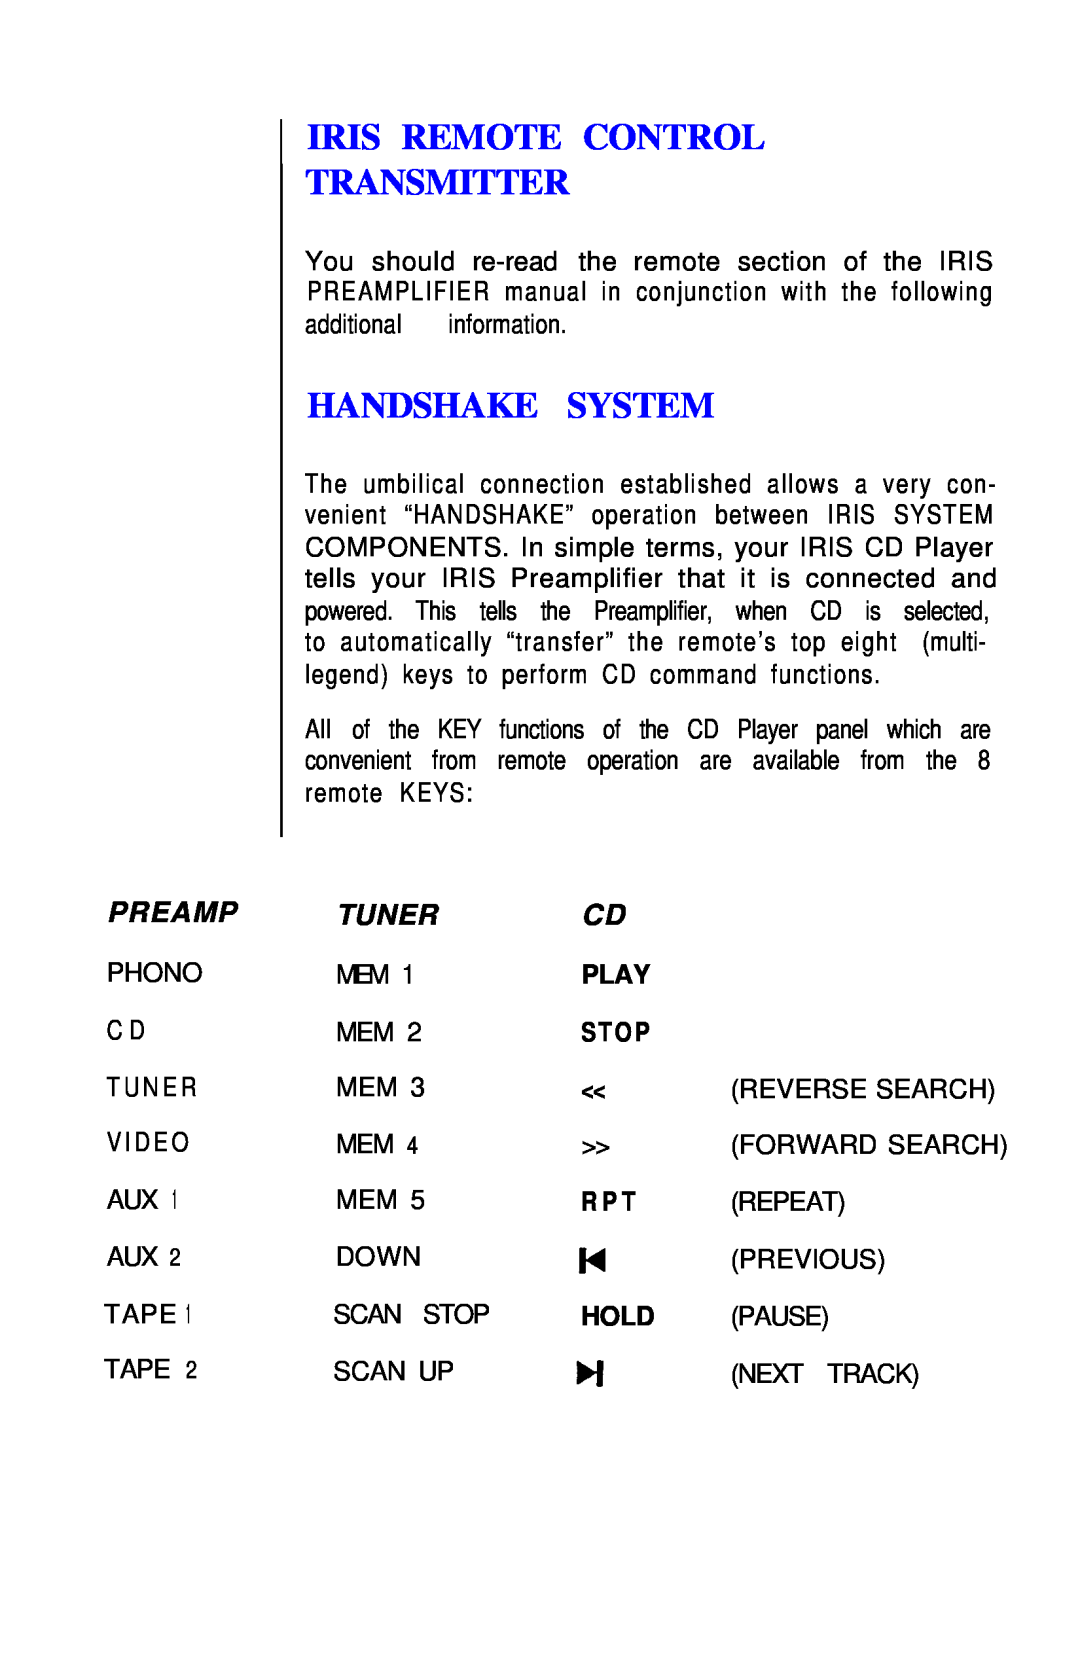 Hafler IRIS COMPACT DISC PLAYER owner manual I Iris Remote Control Transmitter, Handshake System, Preamp, Tuner 